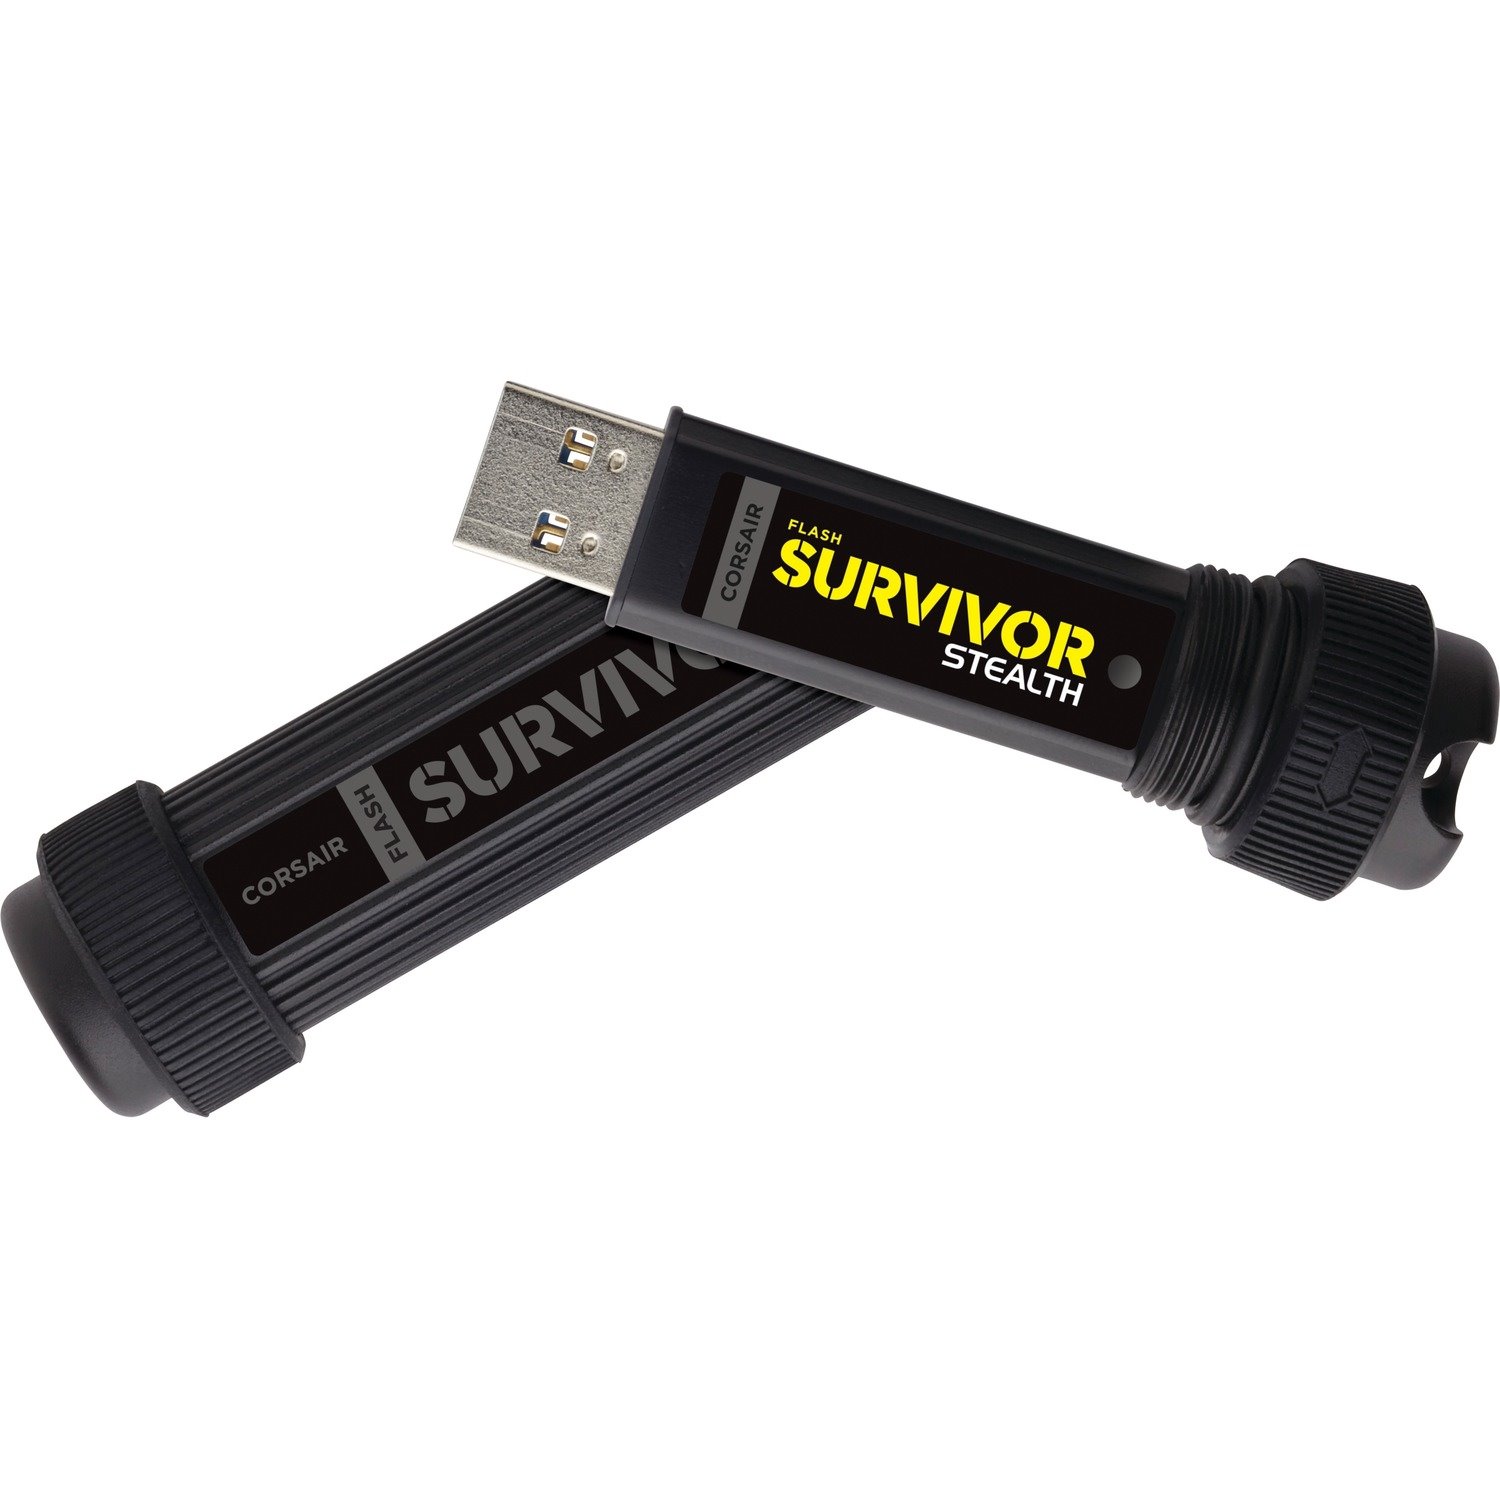 Corsair Flash Survivor 64 GB USB 3.0 Flash Drive - Black